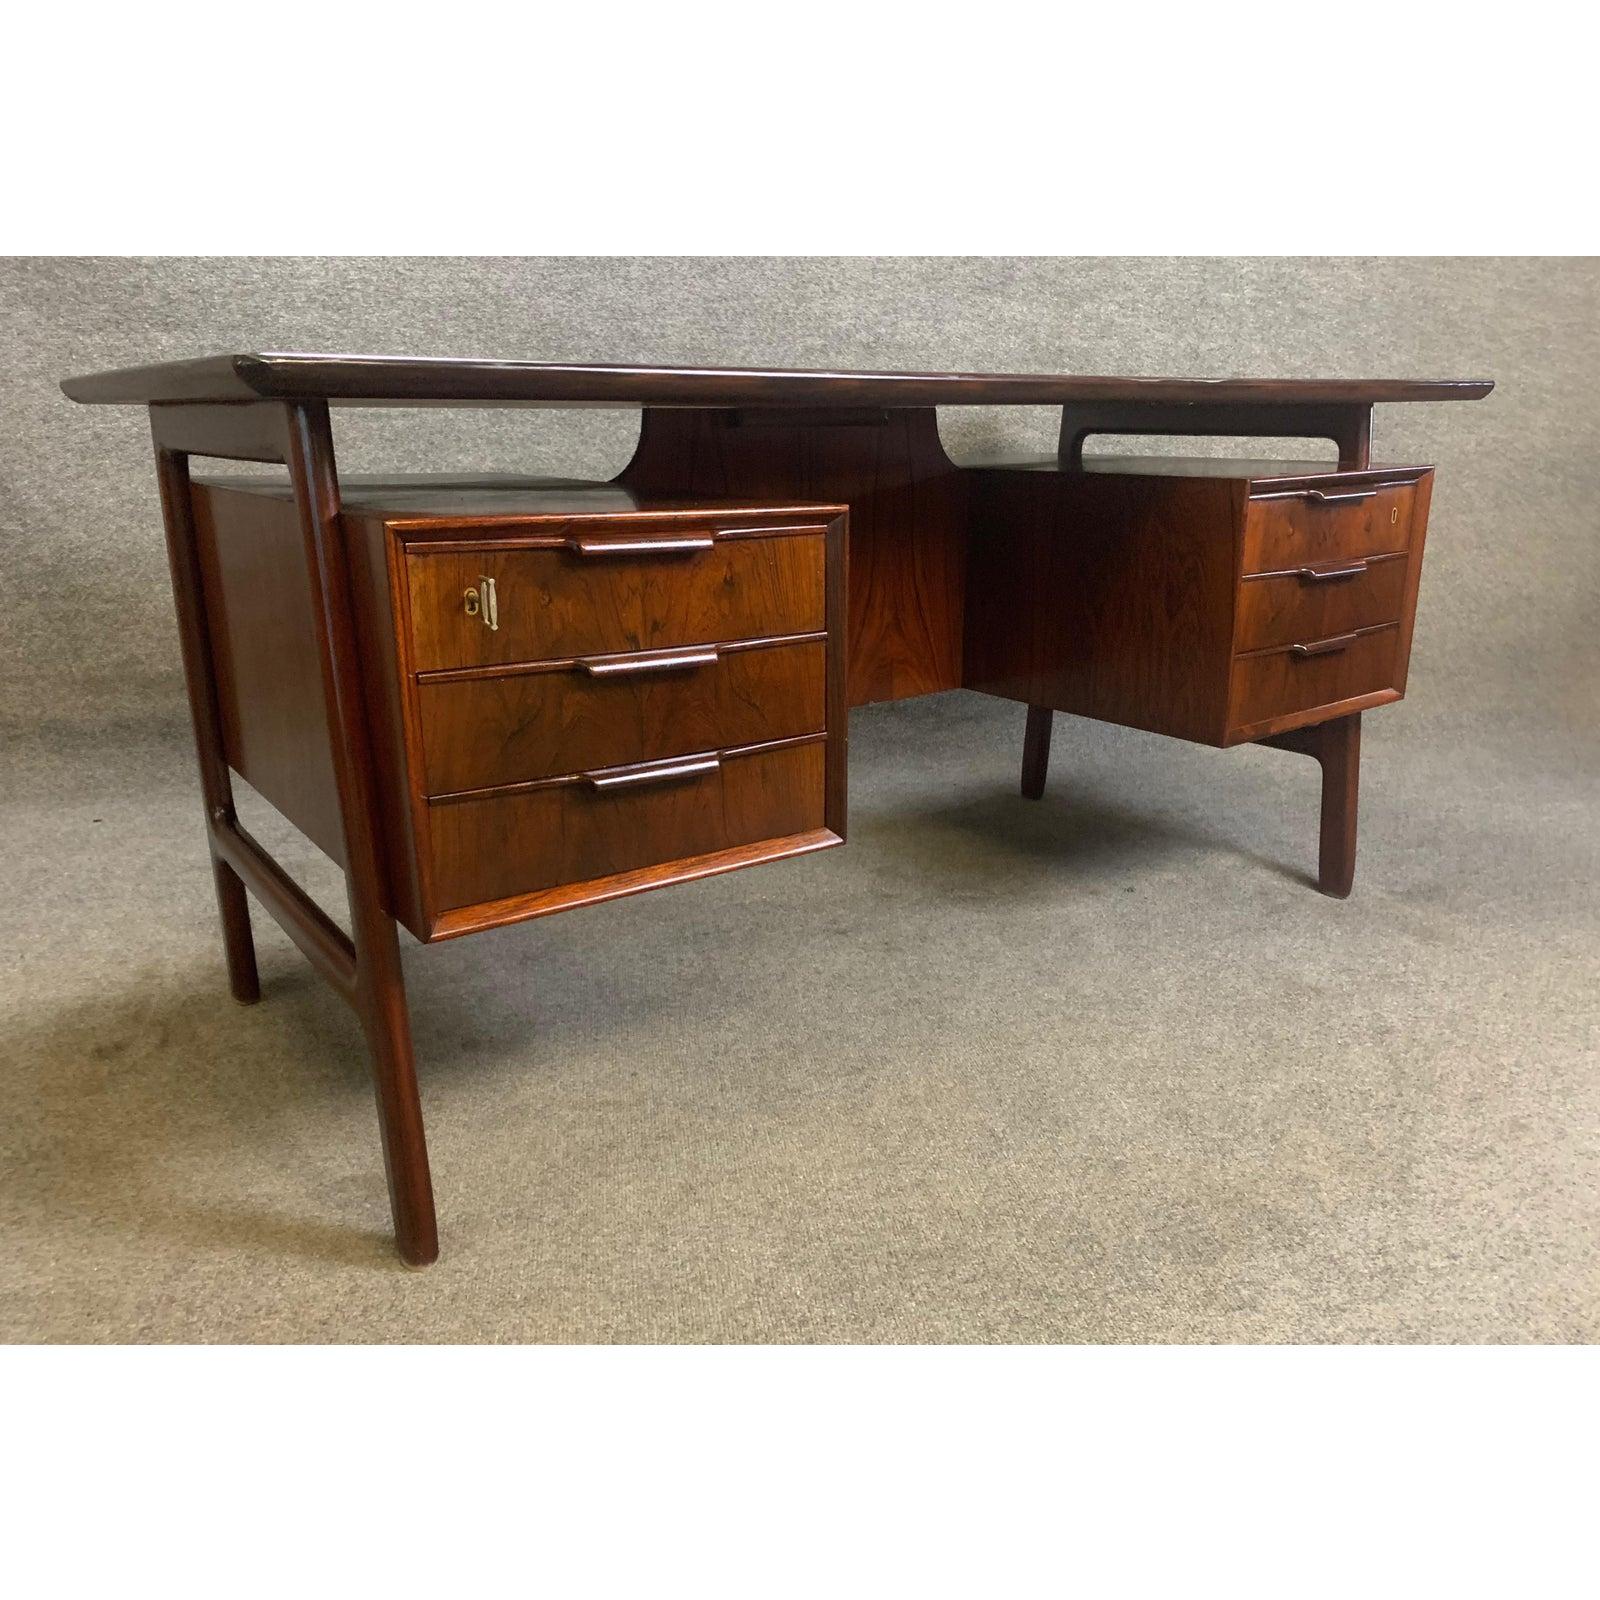 Mid-20th Century Vintage Danish Midcentury Rosewood Desk Model 75 by Gunni Oman for Omann Jun